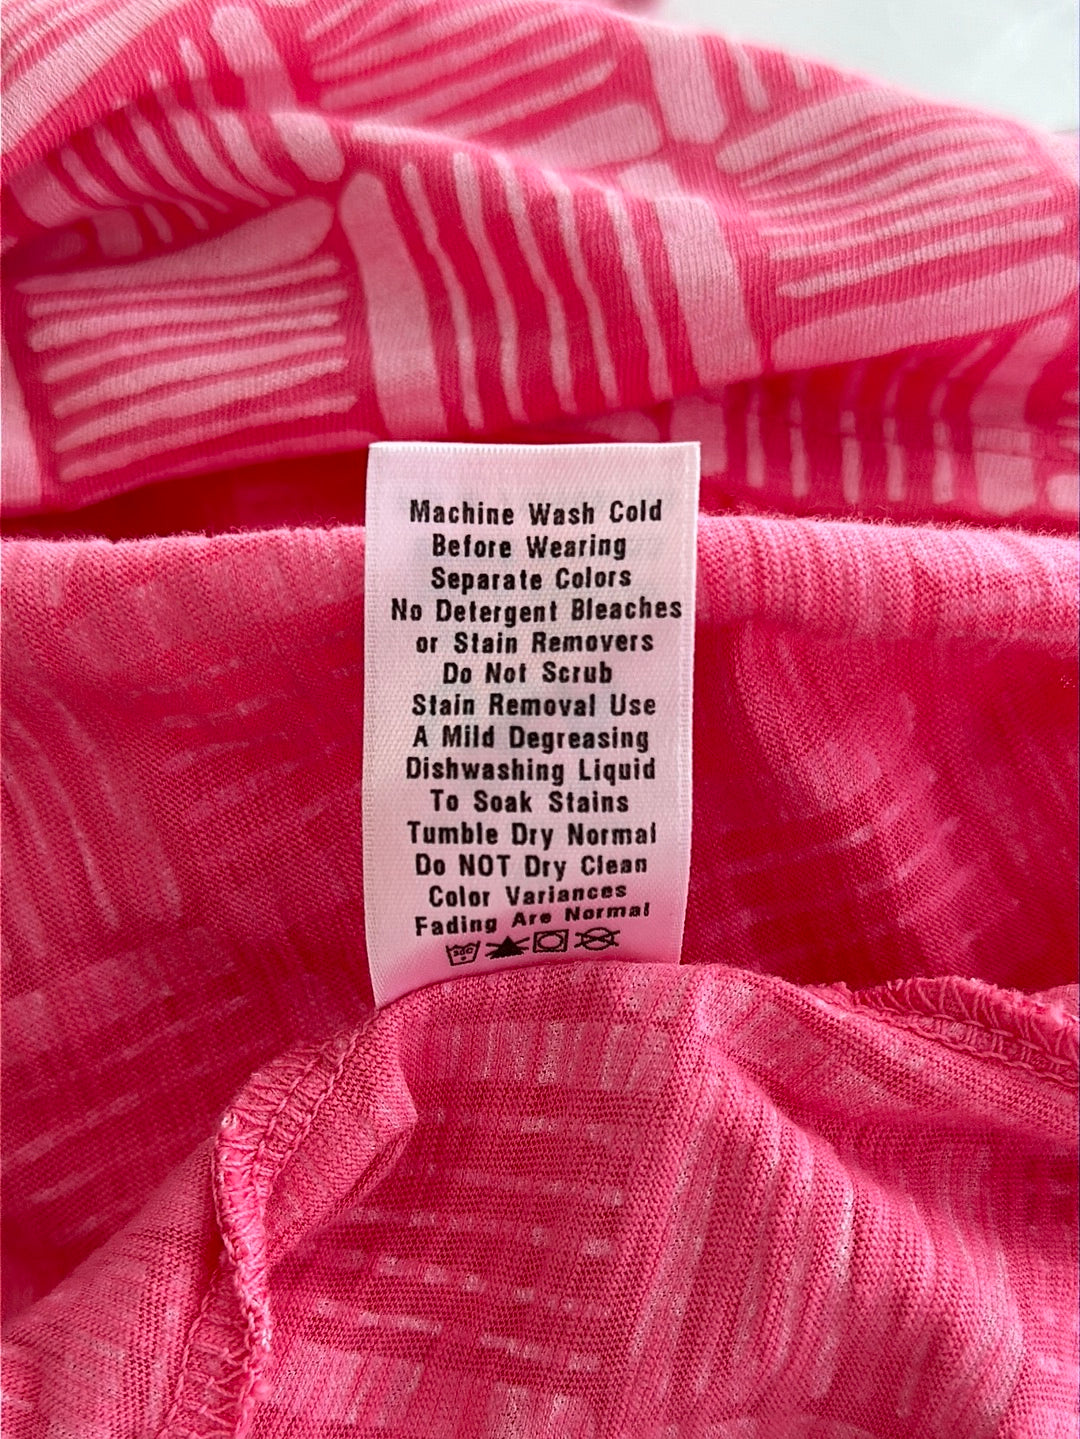 FRESH PRODUCE pink Down Under Print Drape Jersey Cotton Dress - L